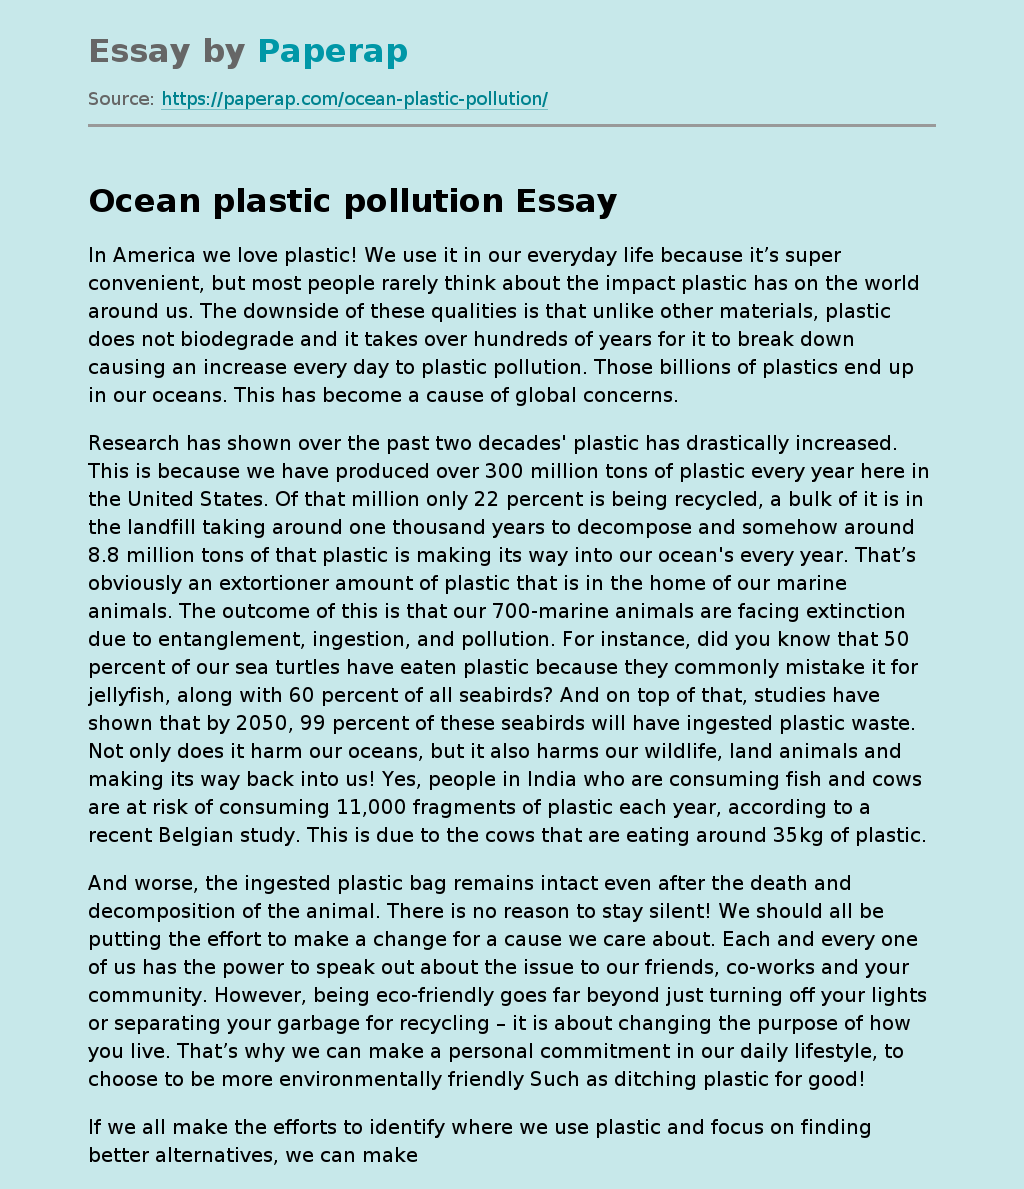 ocean pollution essay outline